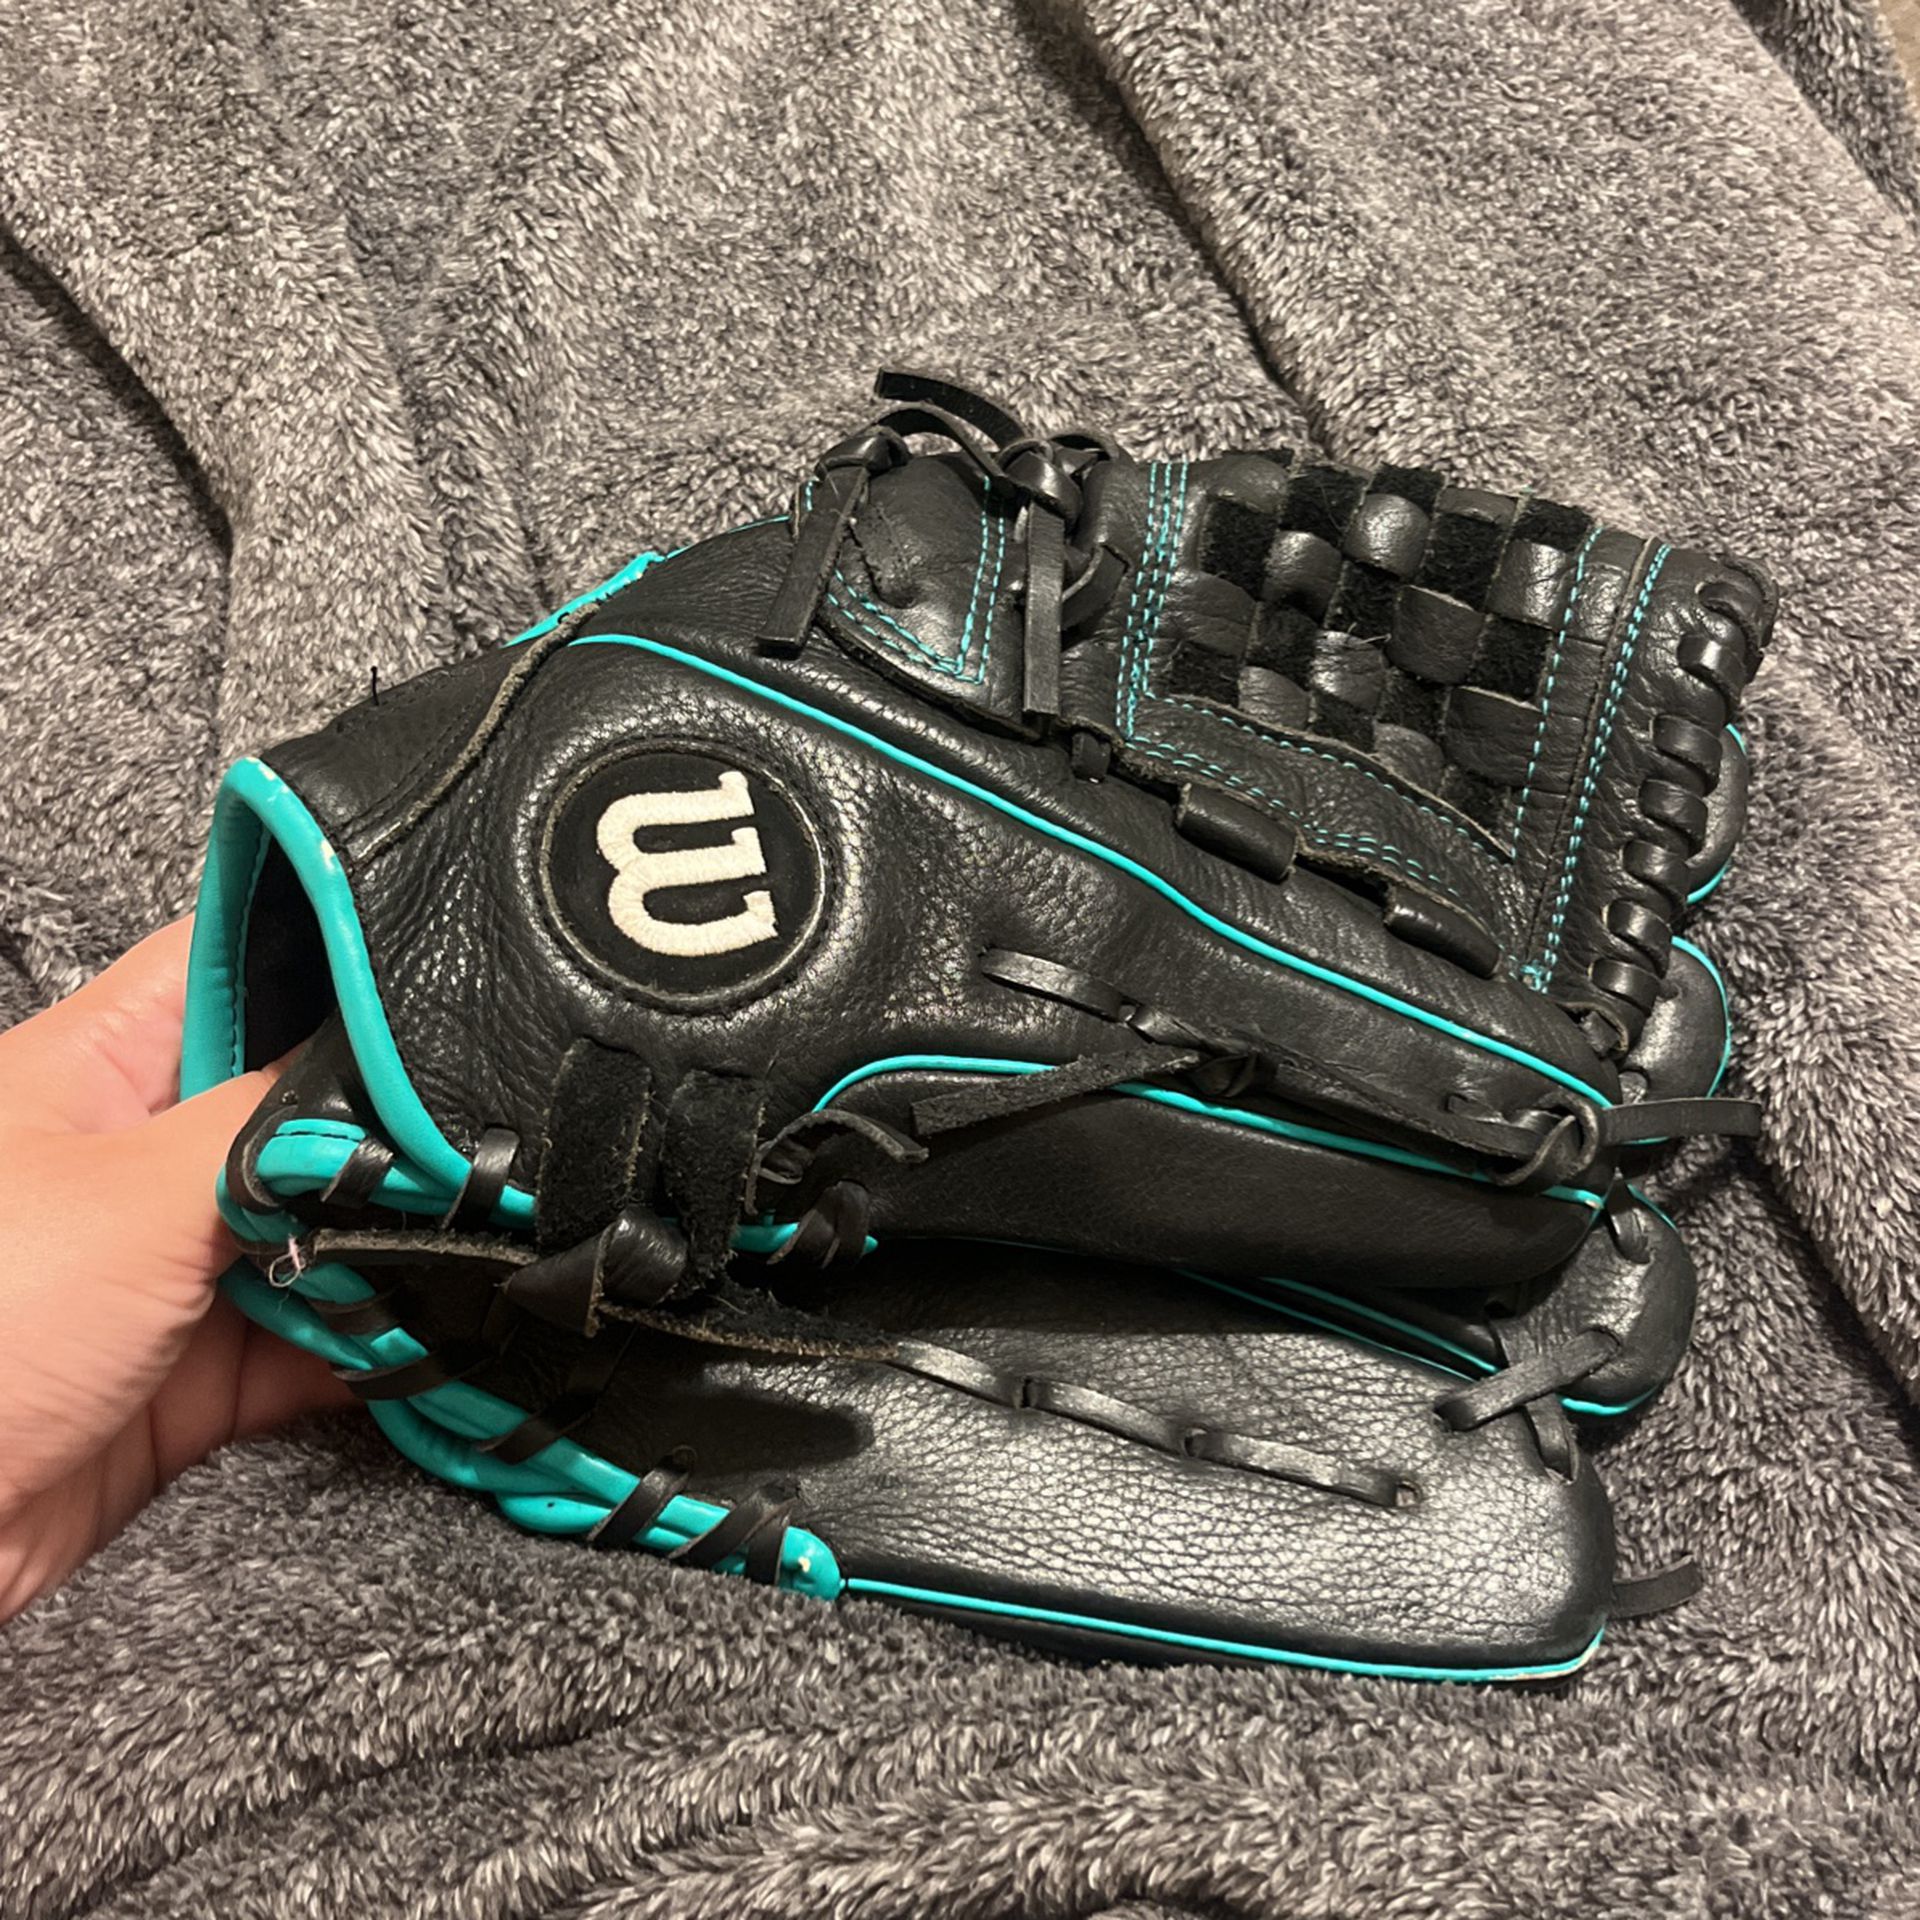 Wilson softball glove 